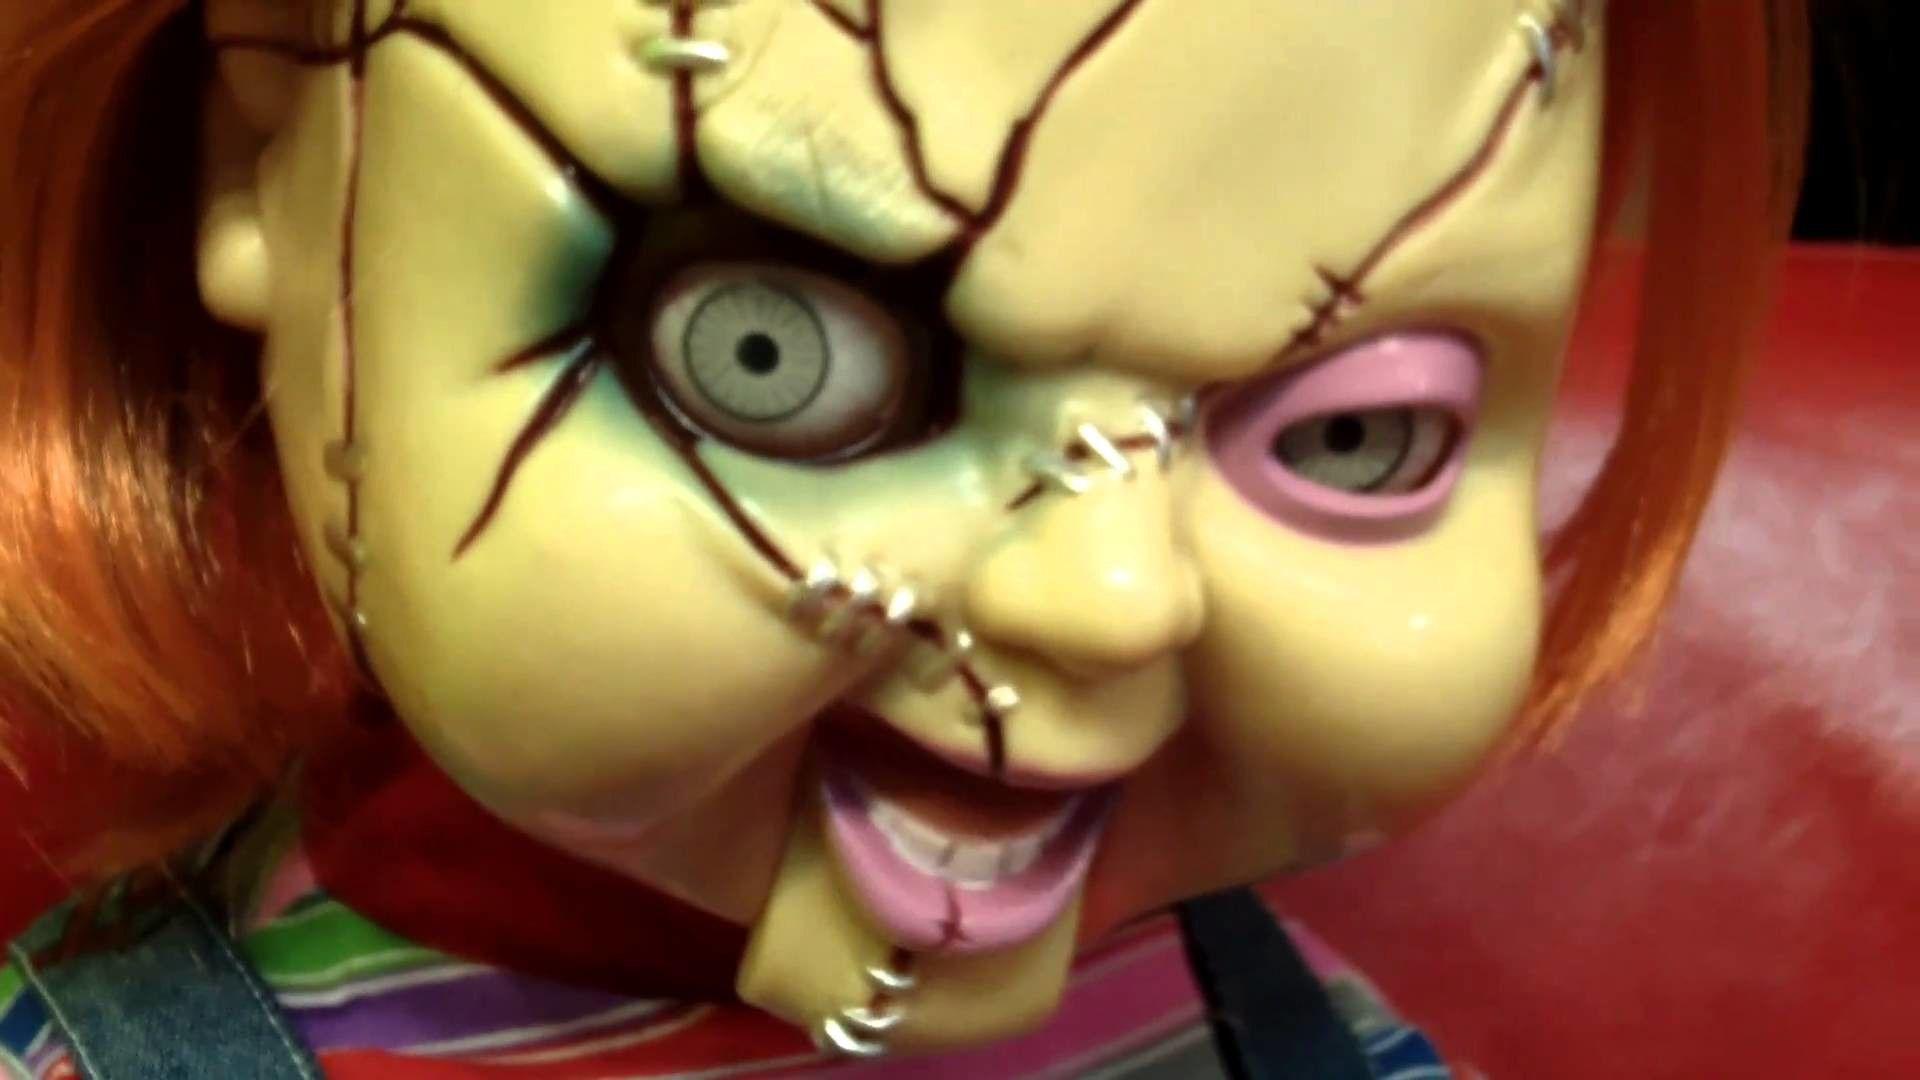 Chucky Doll Wallpaper